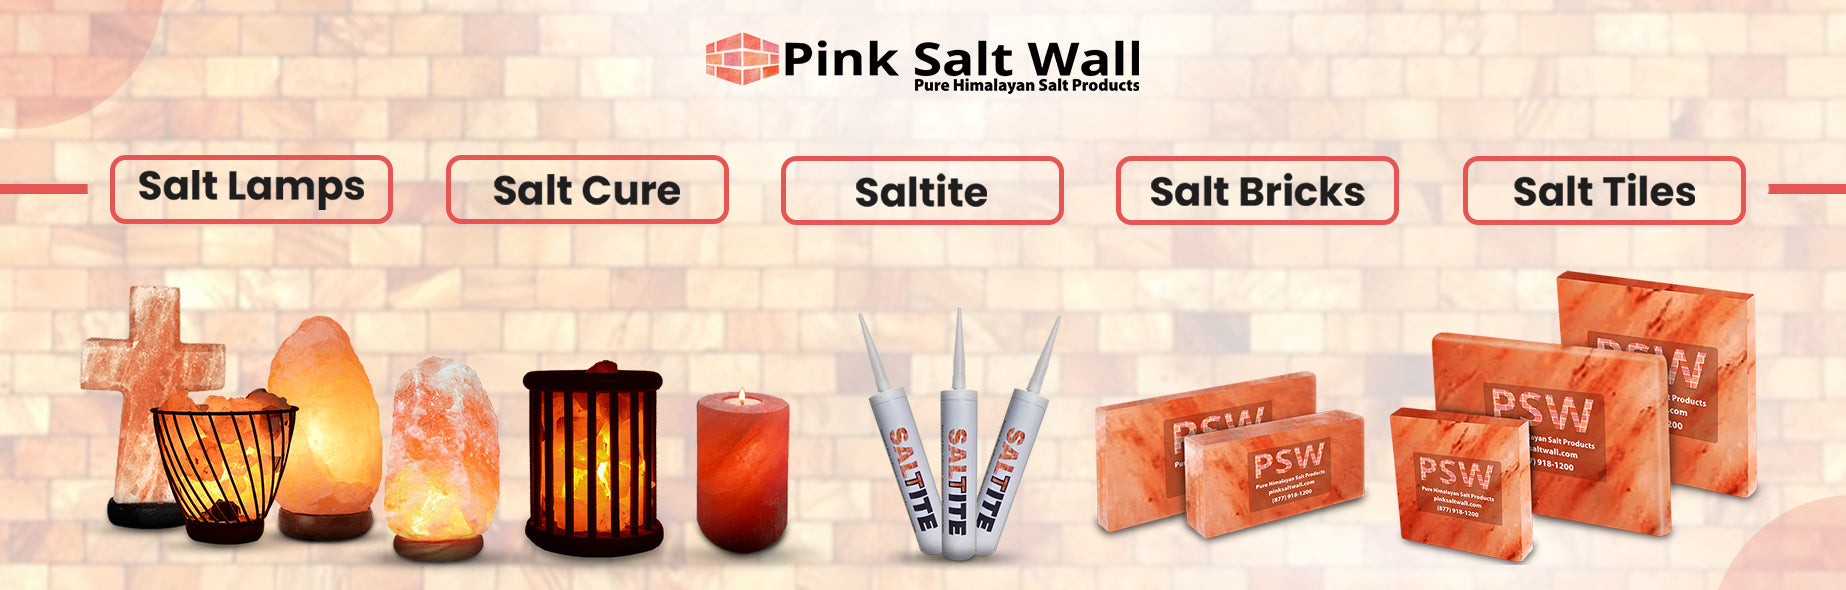 Pink salt products